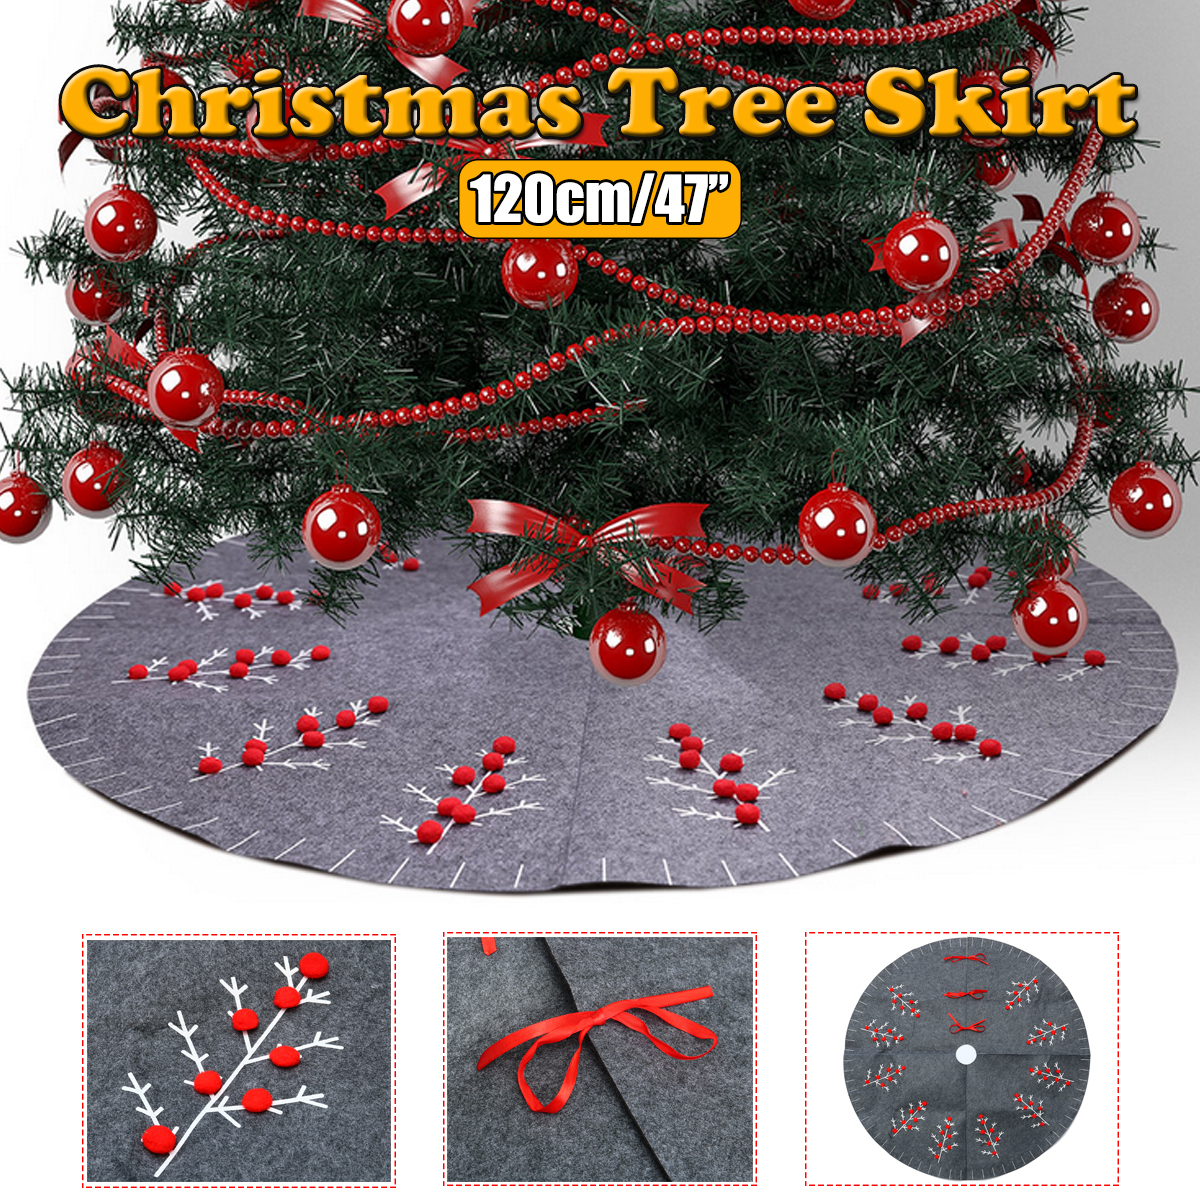 2020-Christmas-Decor-120cm-New-Year-Xmas-Tree-Carpet-Foot-Cover-Christmas-Tree-Skirt-Aprons-for-Home-1770953-1